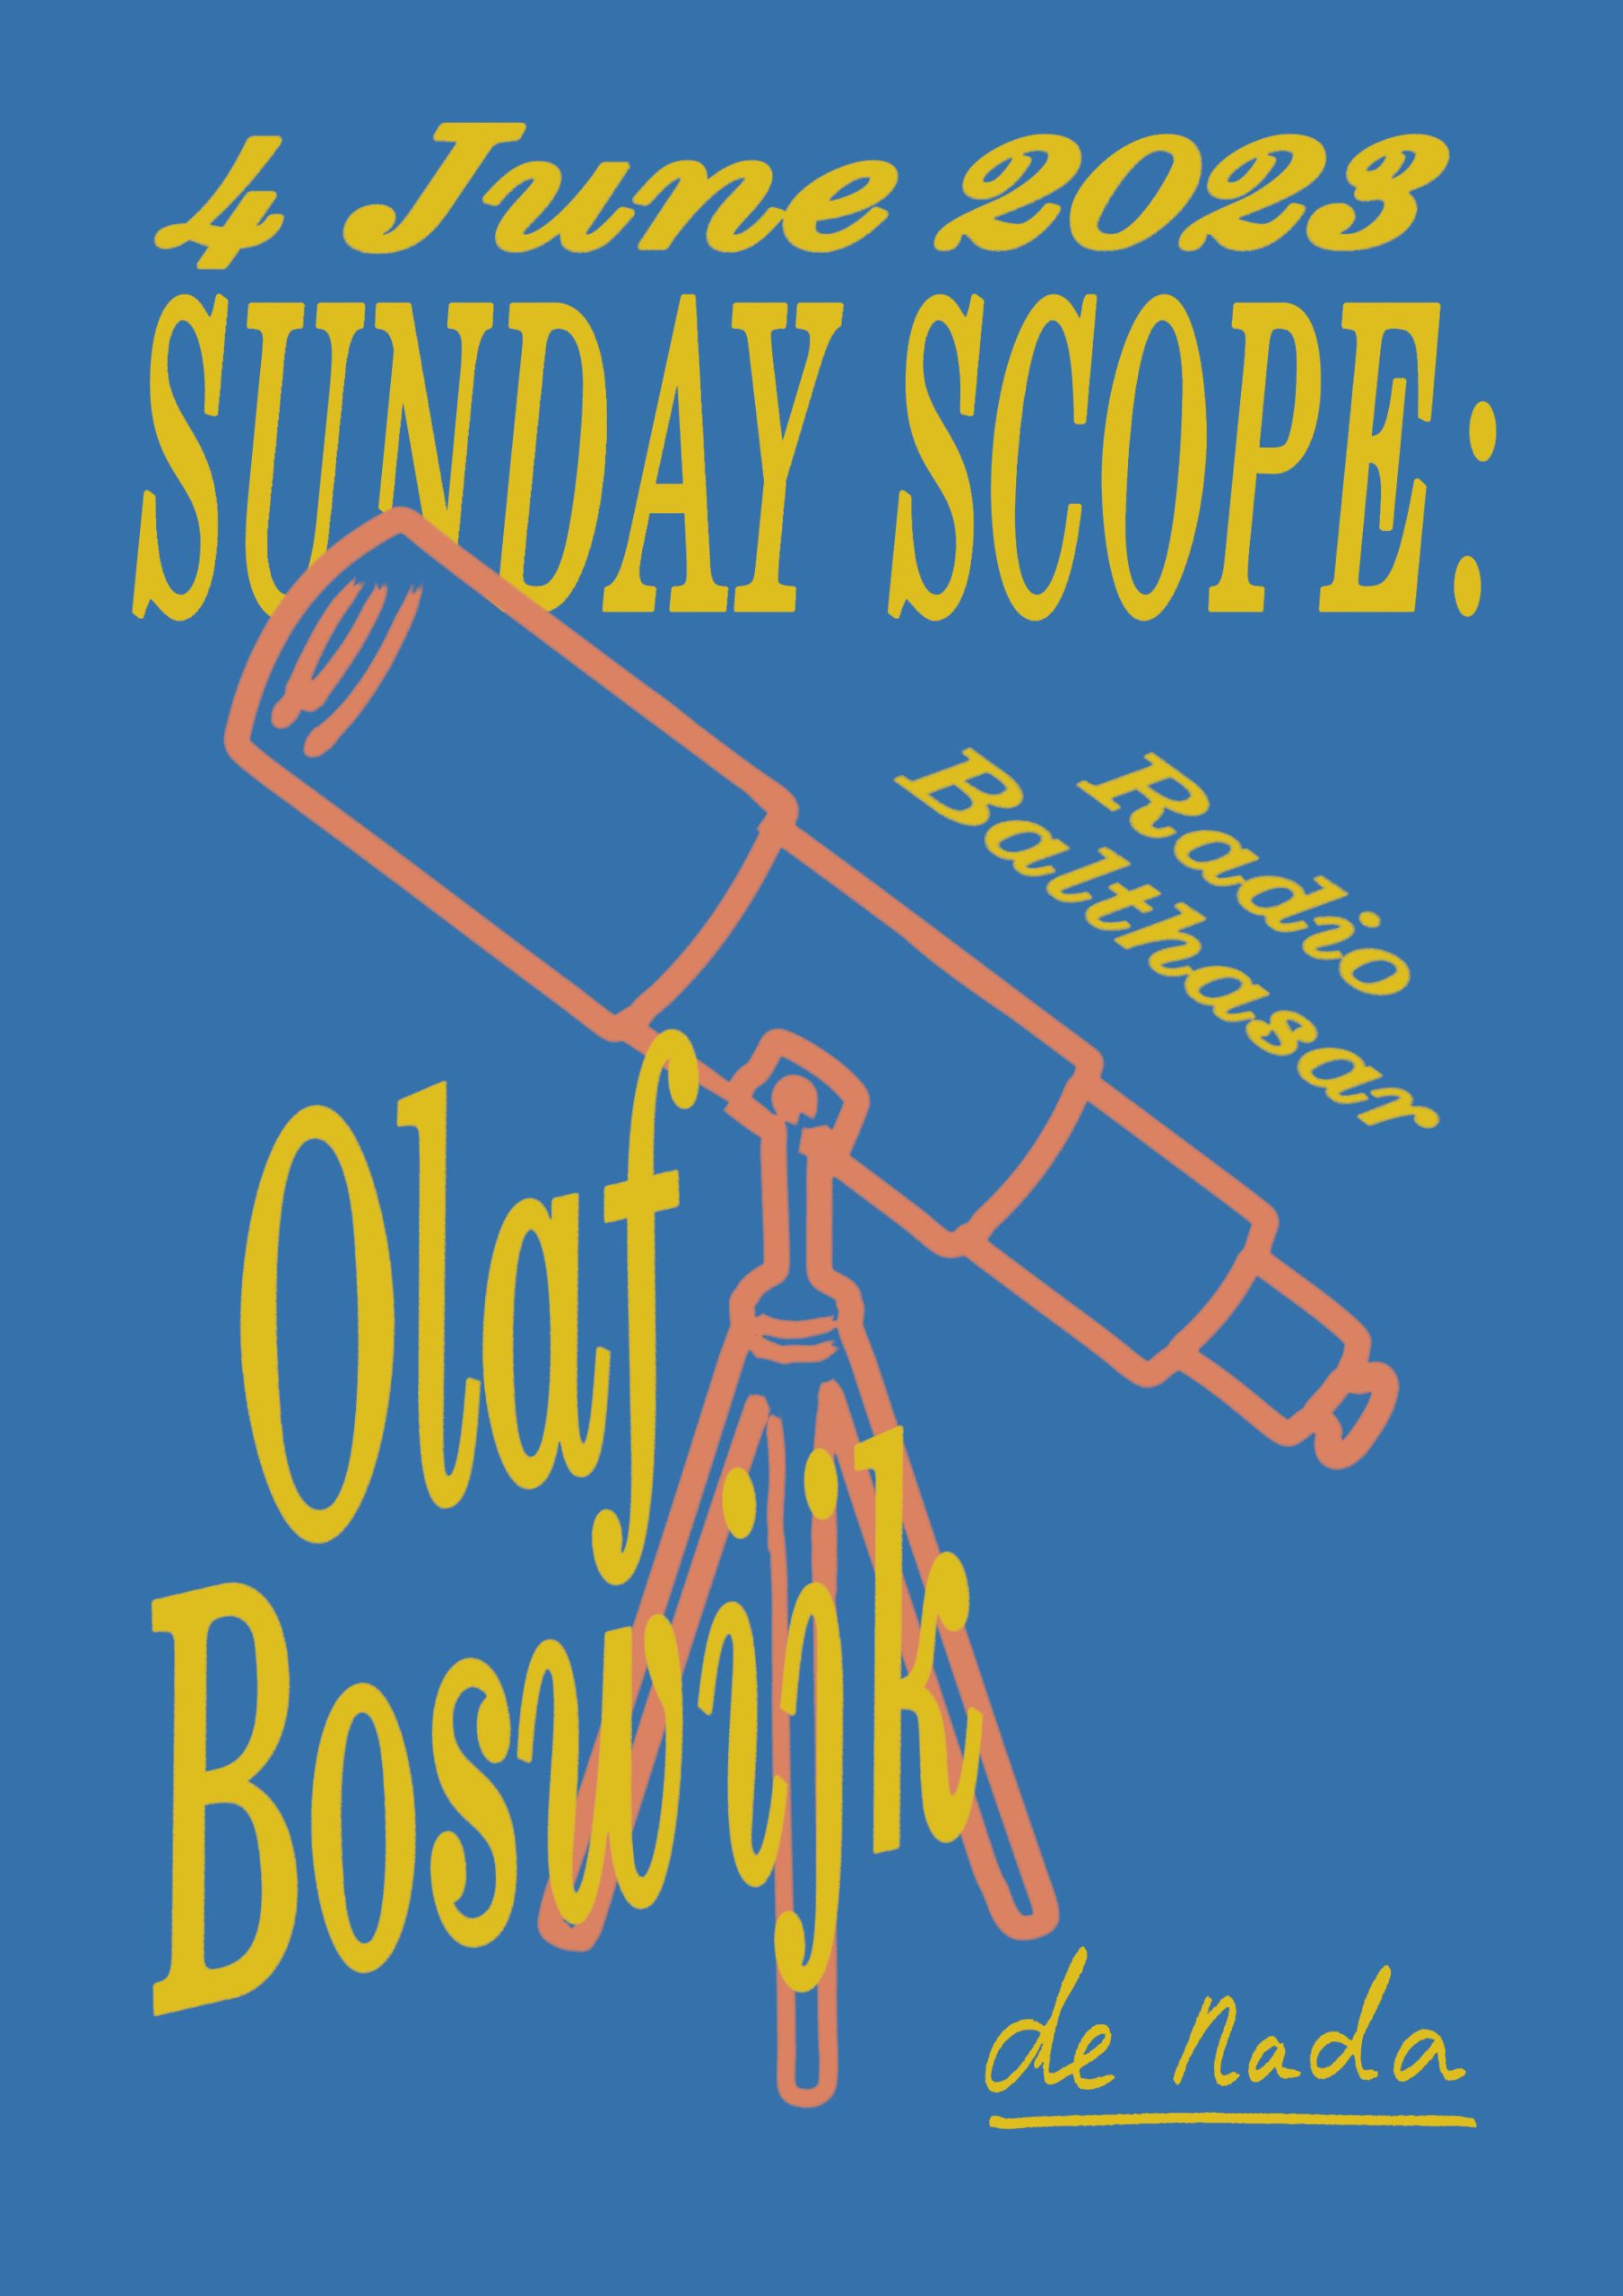 denada-sundayscope-olaf-poster